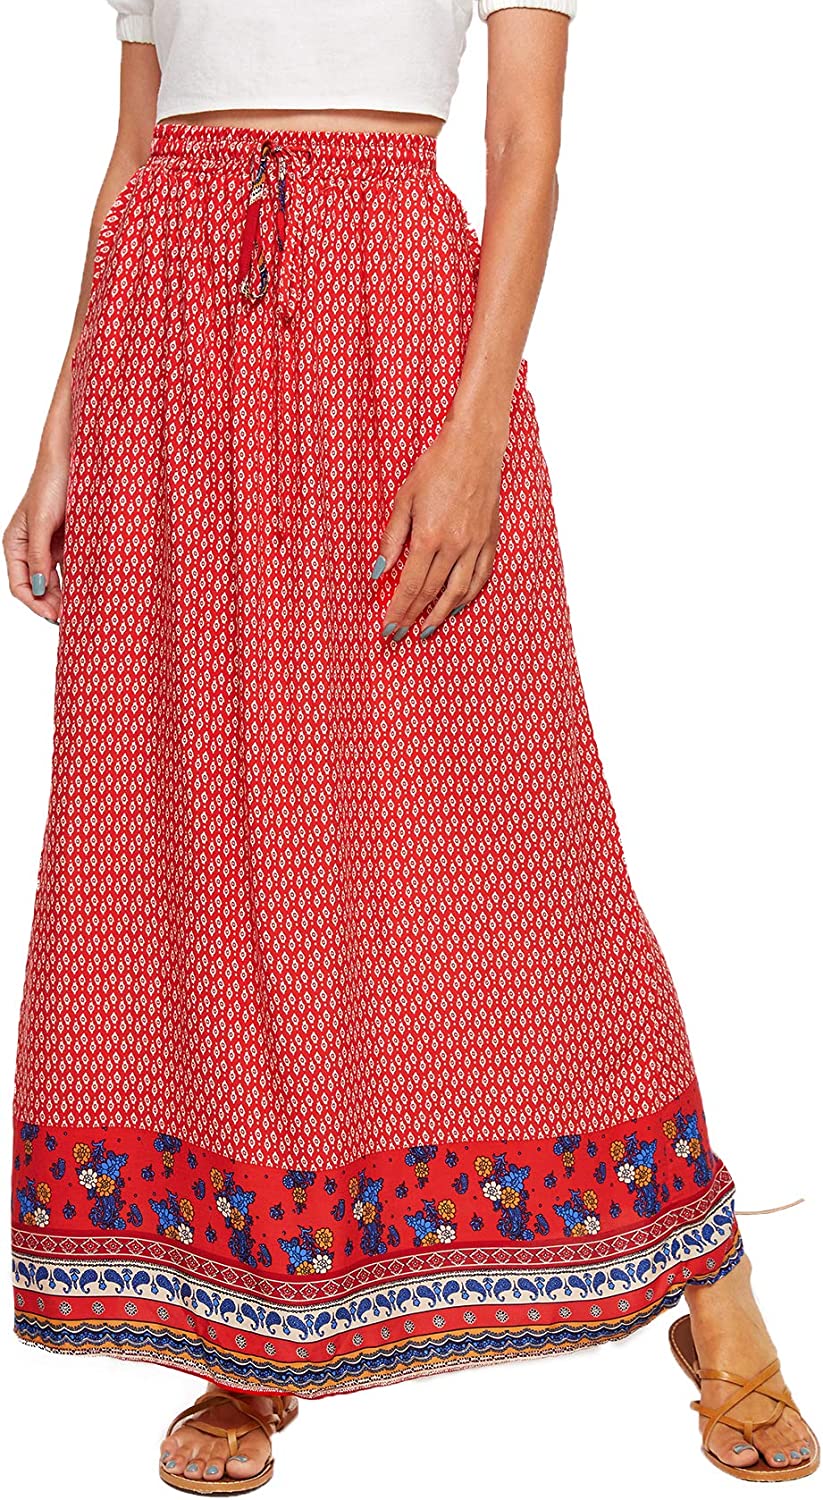 Women's Boho Vintage Print Pockets Side A Line Maxi Skirt